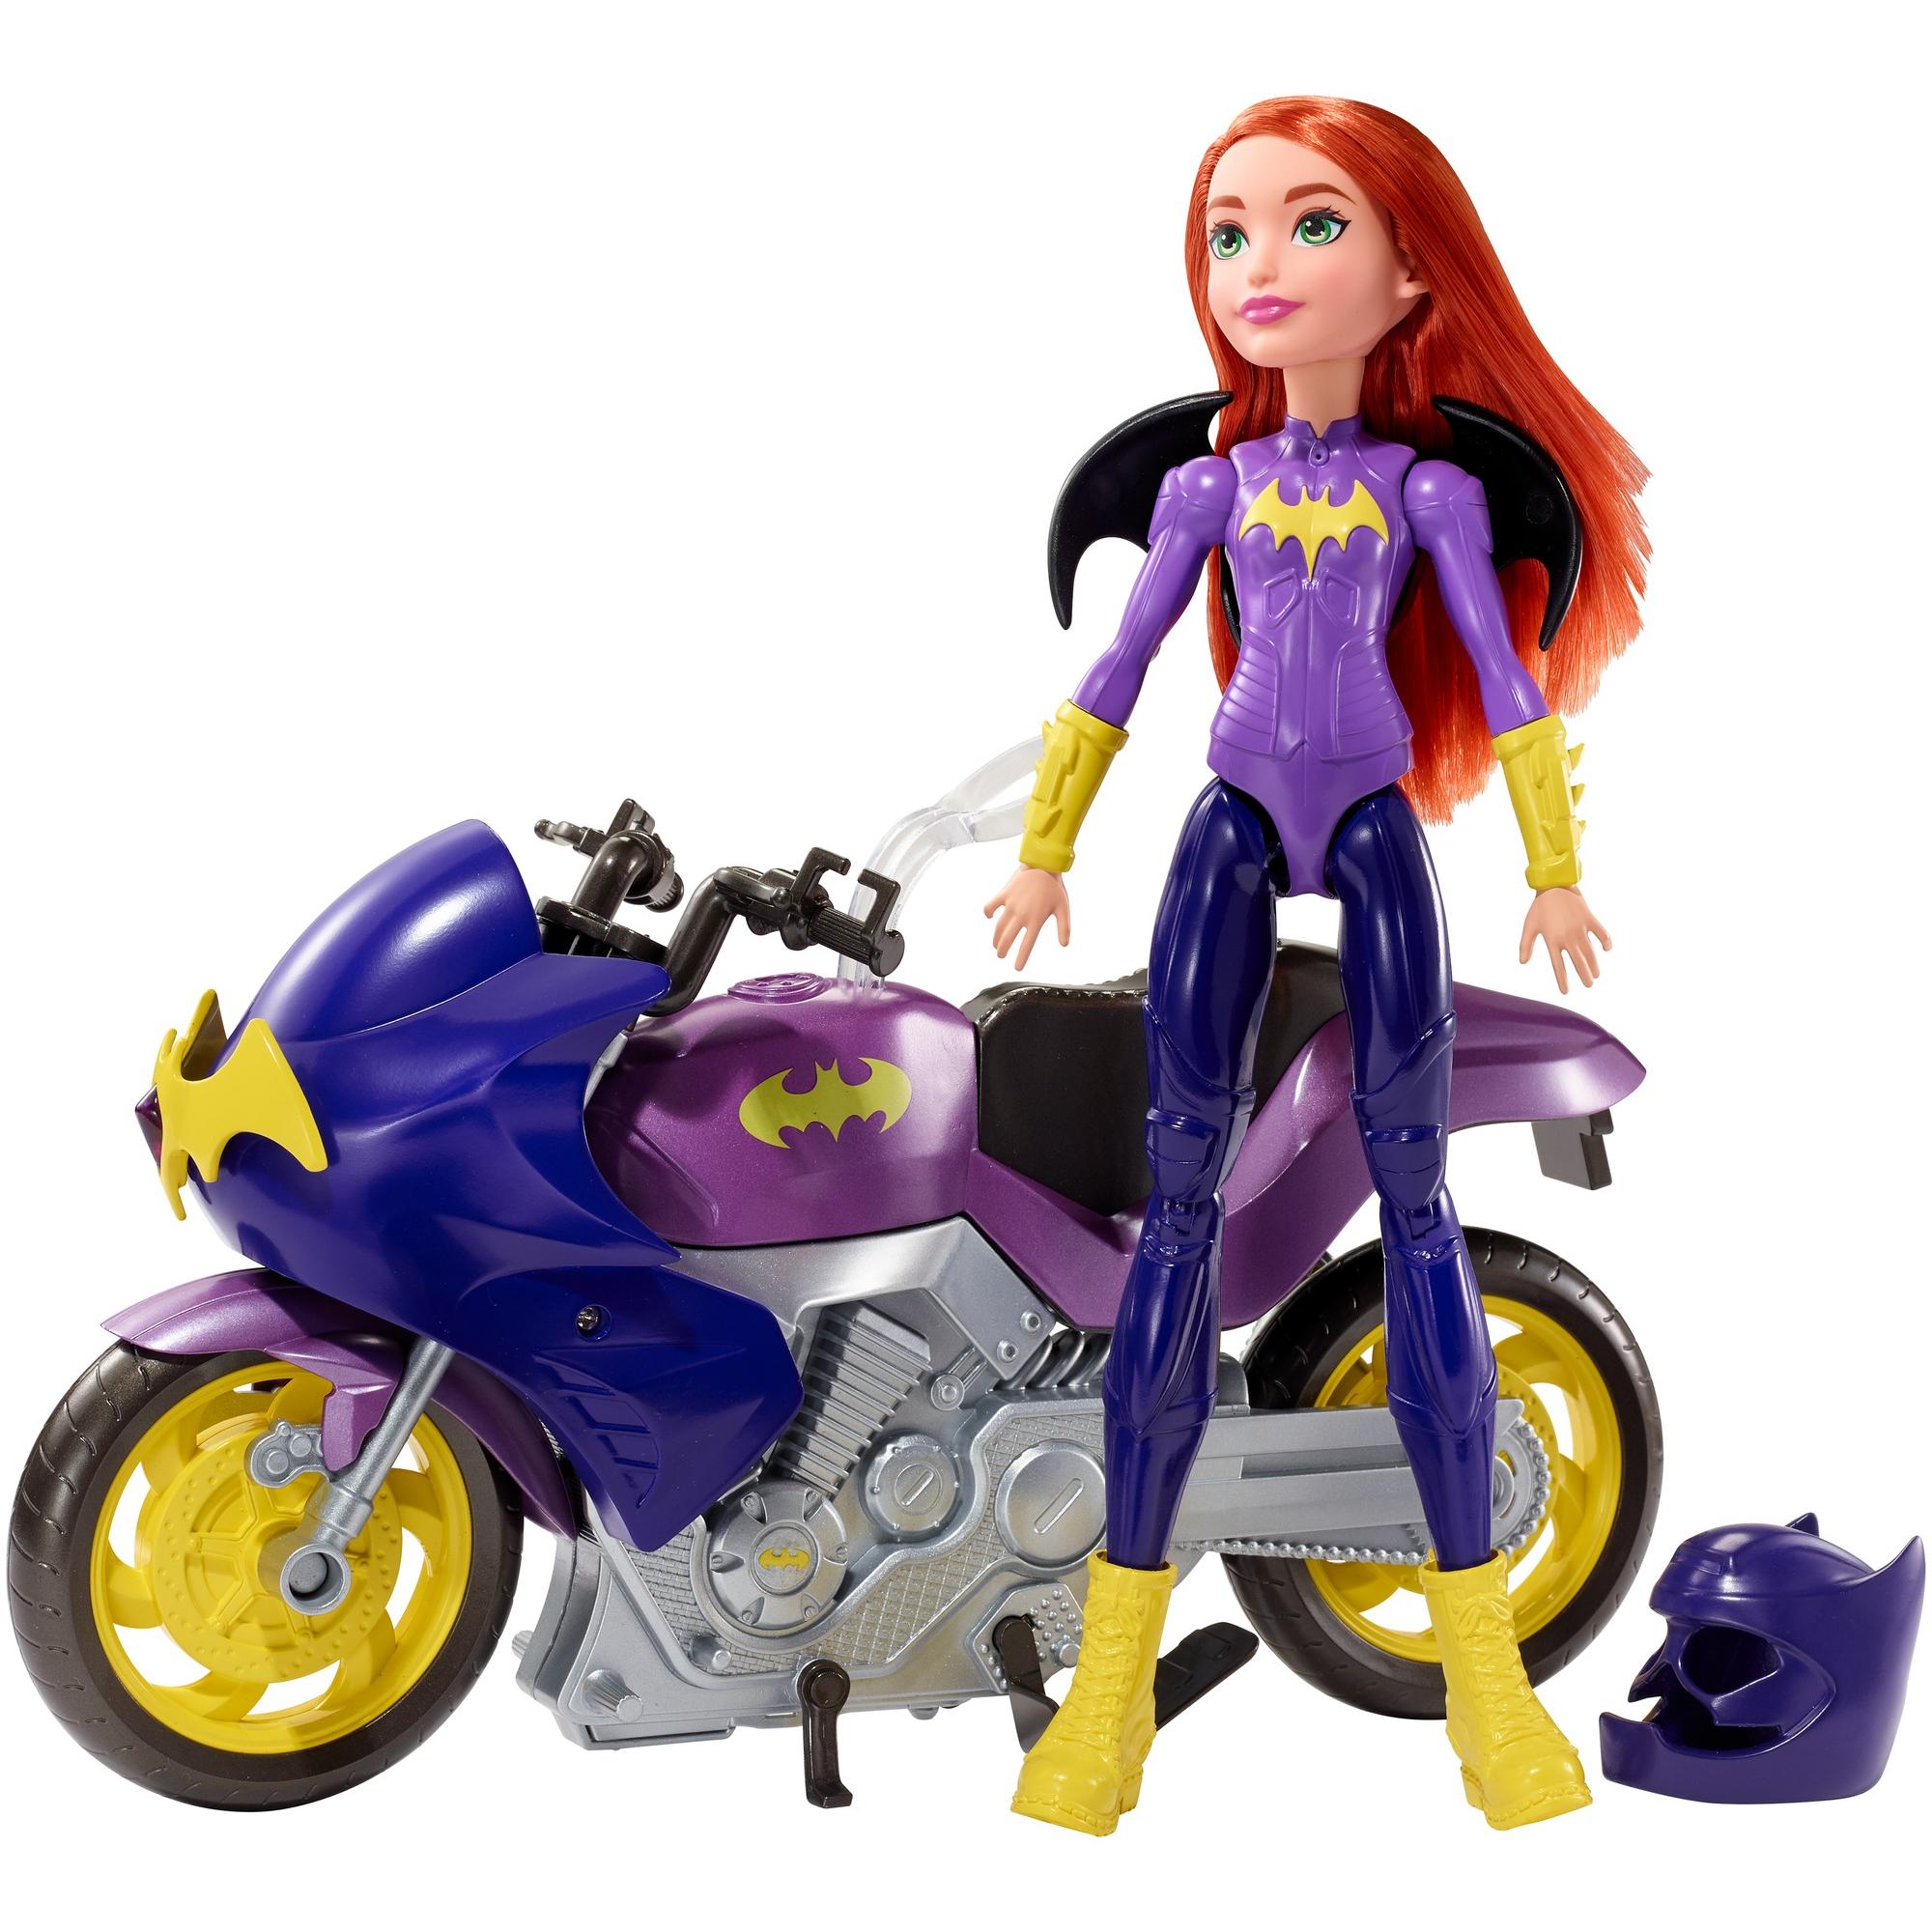 DC Super Hero Girls Batgirl Doll and Batcycle Vehicle Set - image 1 of 12